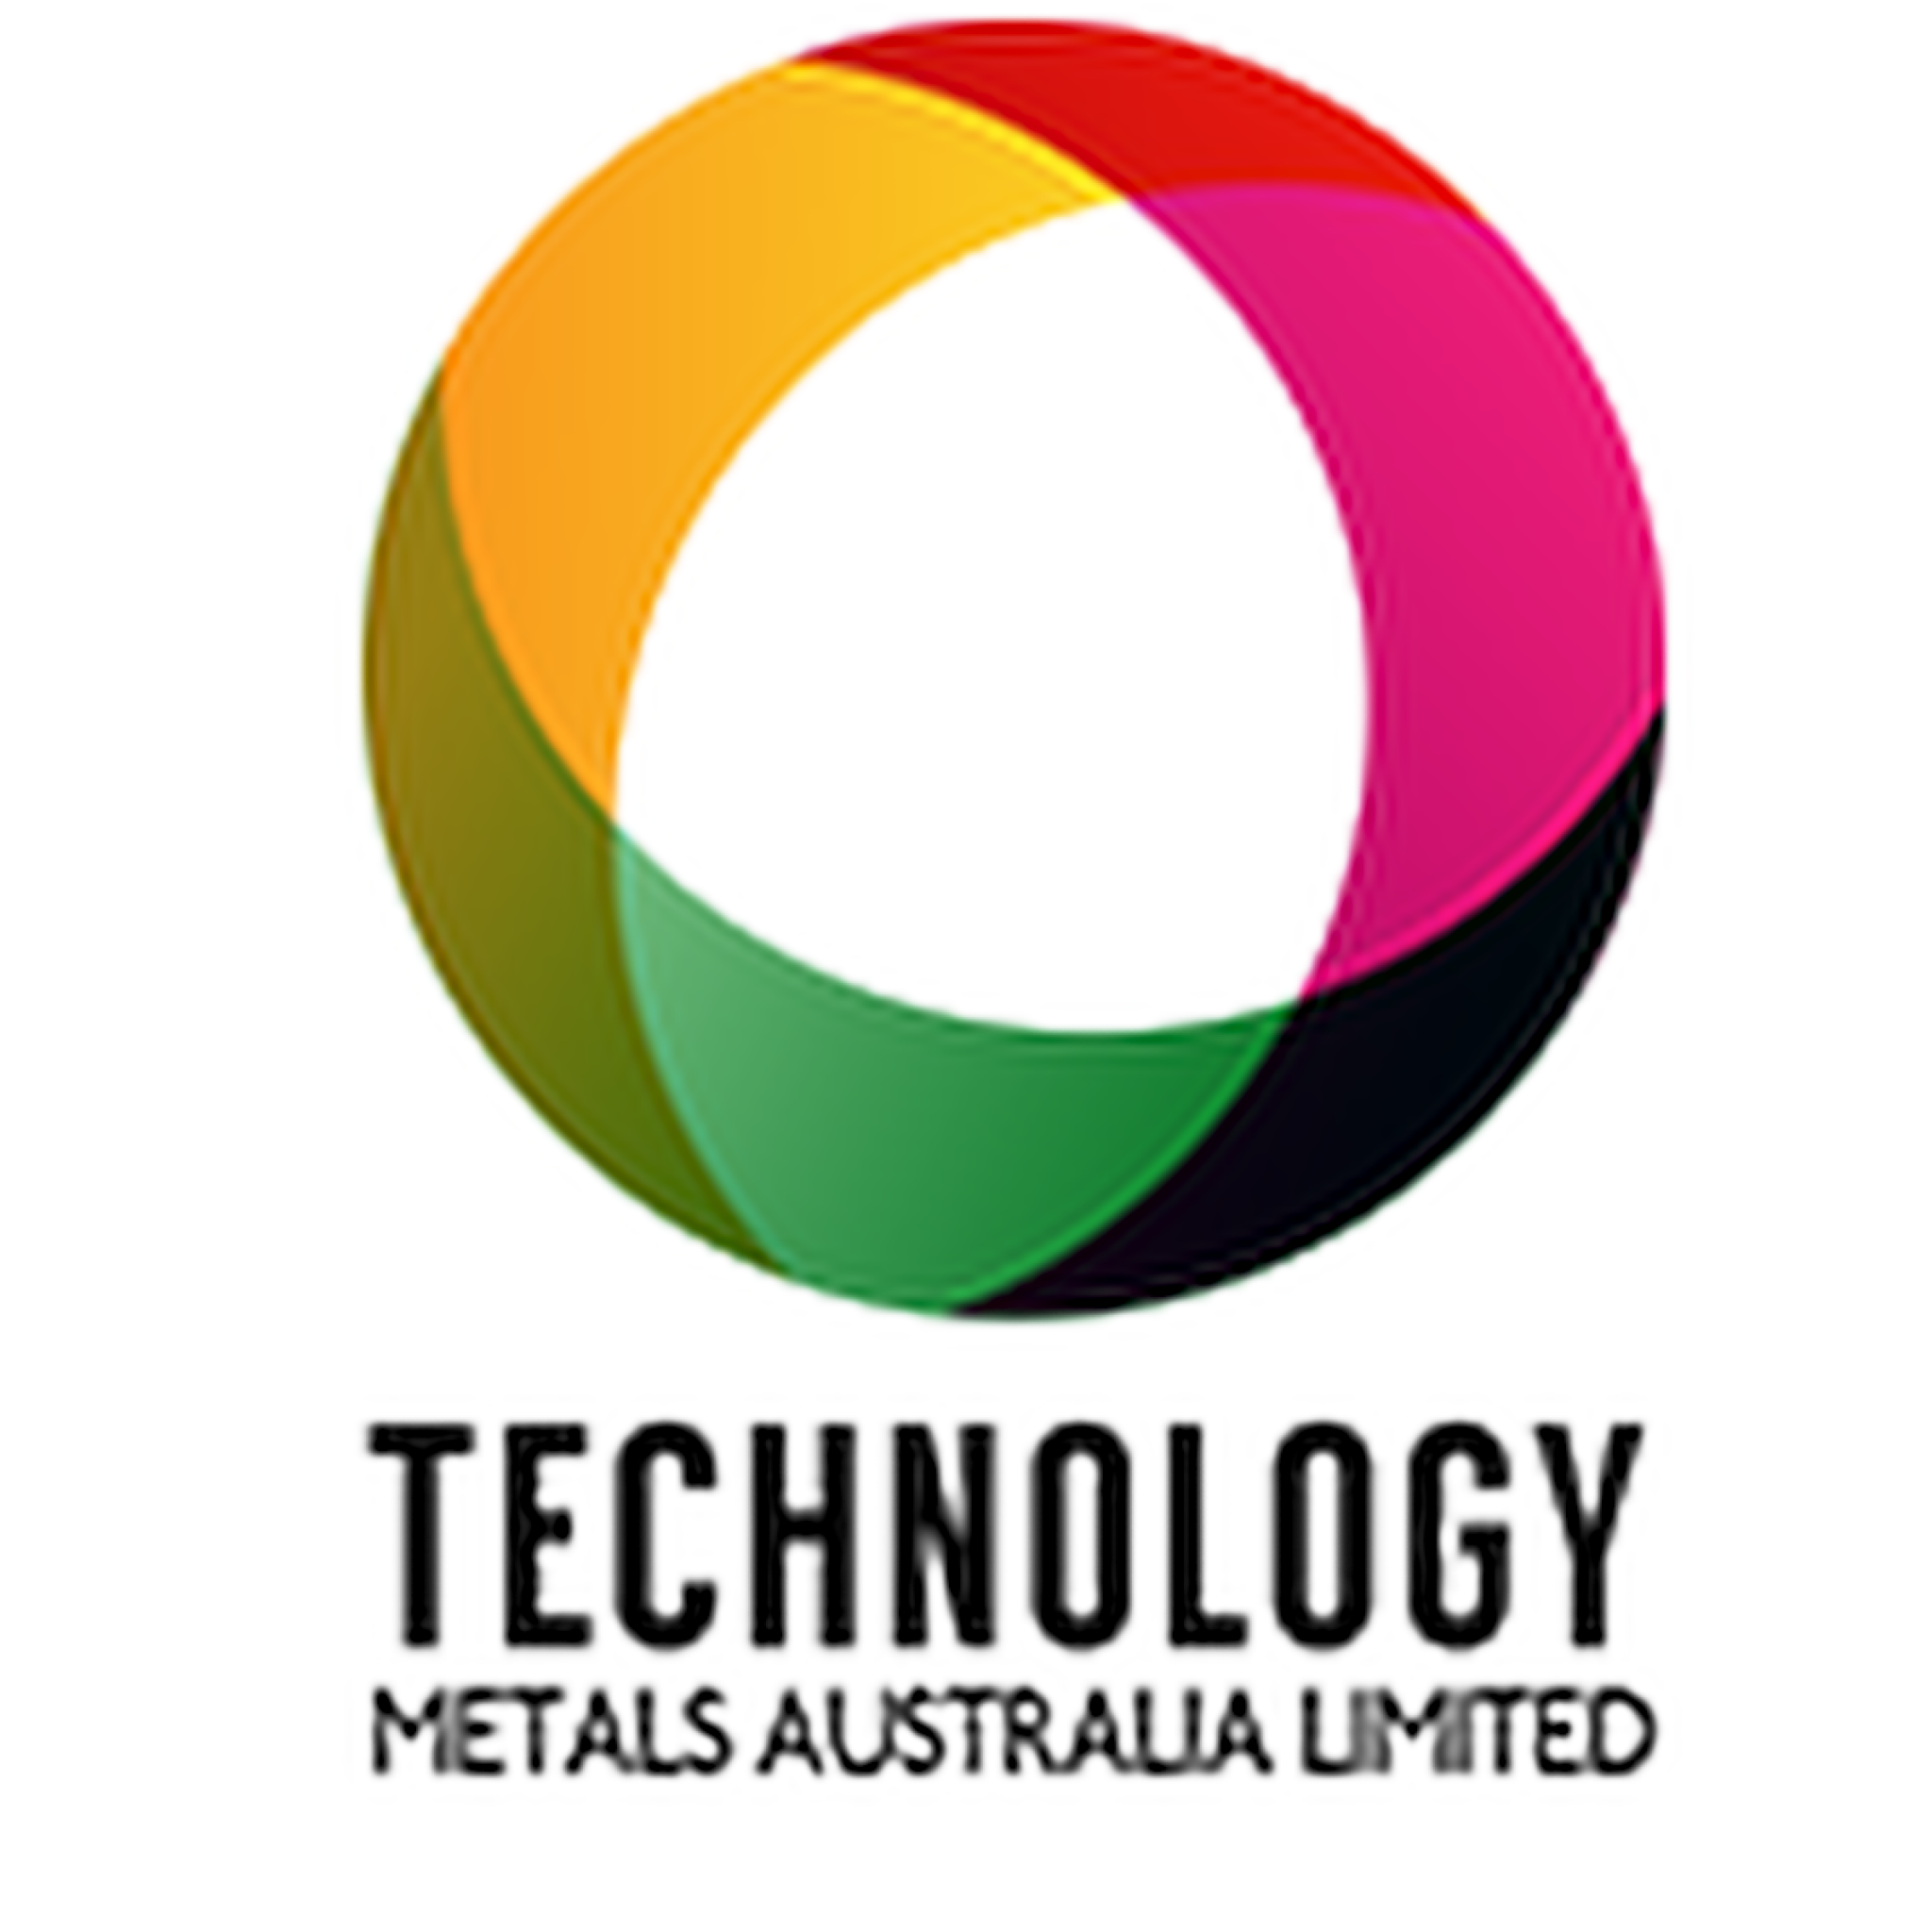 Technology metals. Metal Technology. Metal Technology logo. A2b Australia Limited.